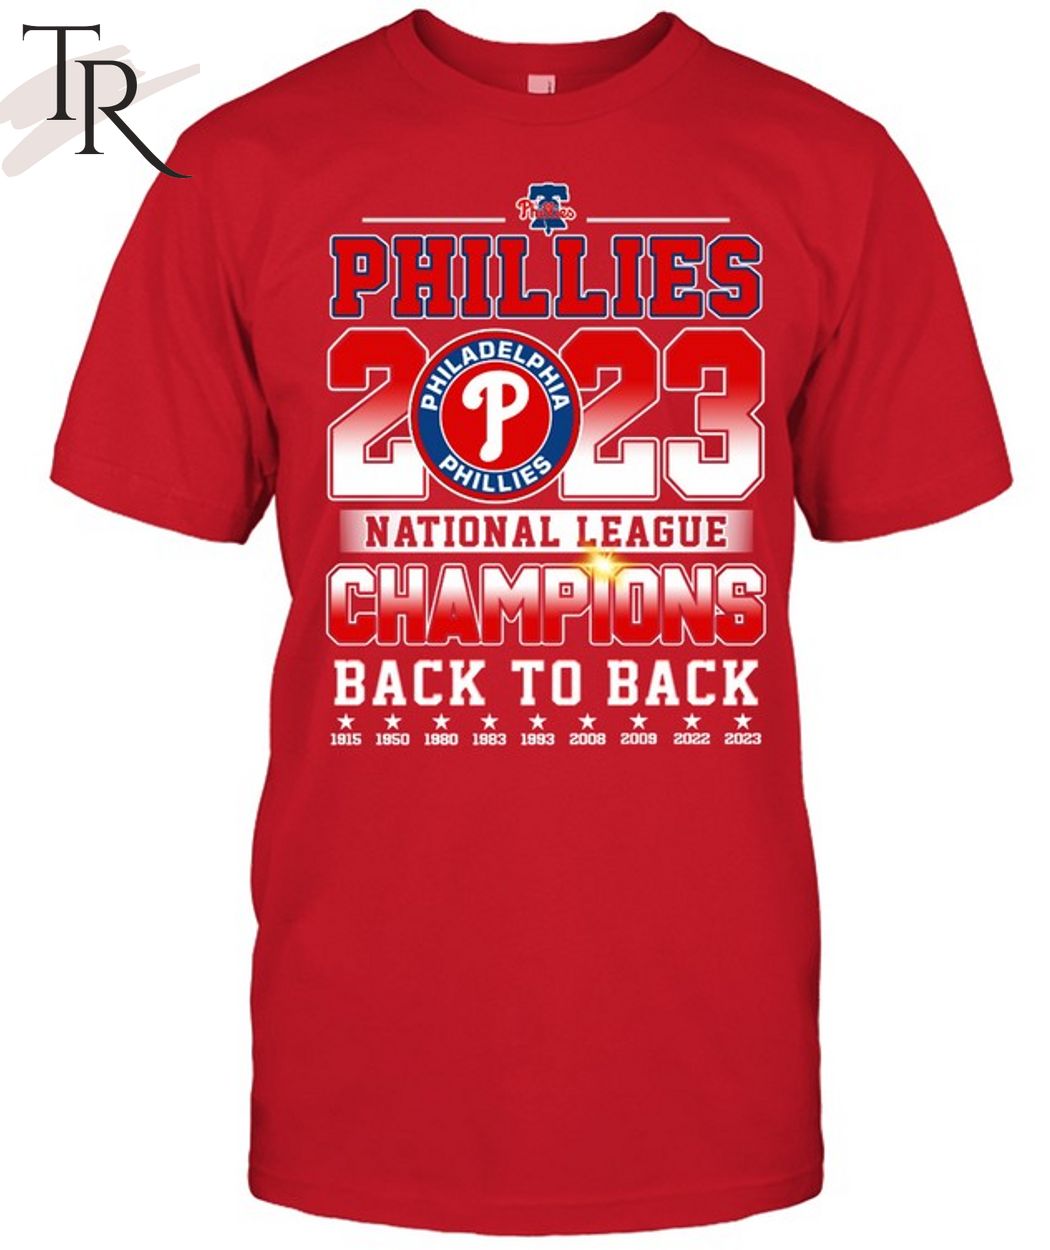 Philadelphia Phillies 2022 National League Champions Fall Cla'22ic World  Series Shirt